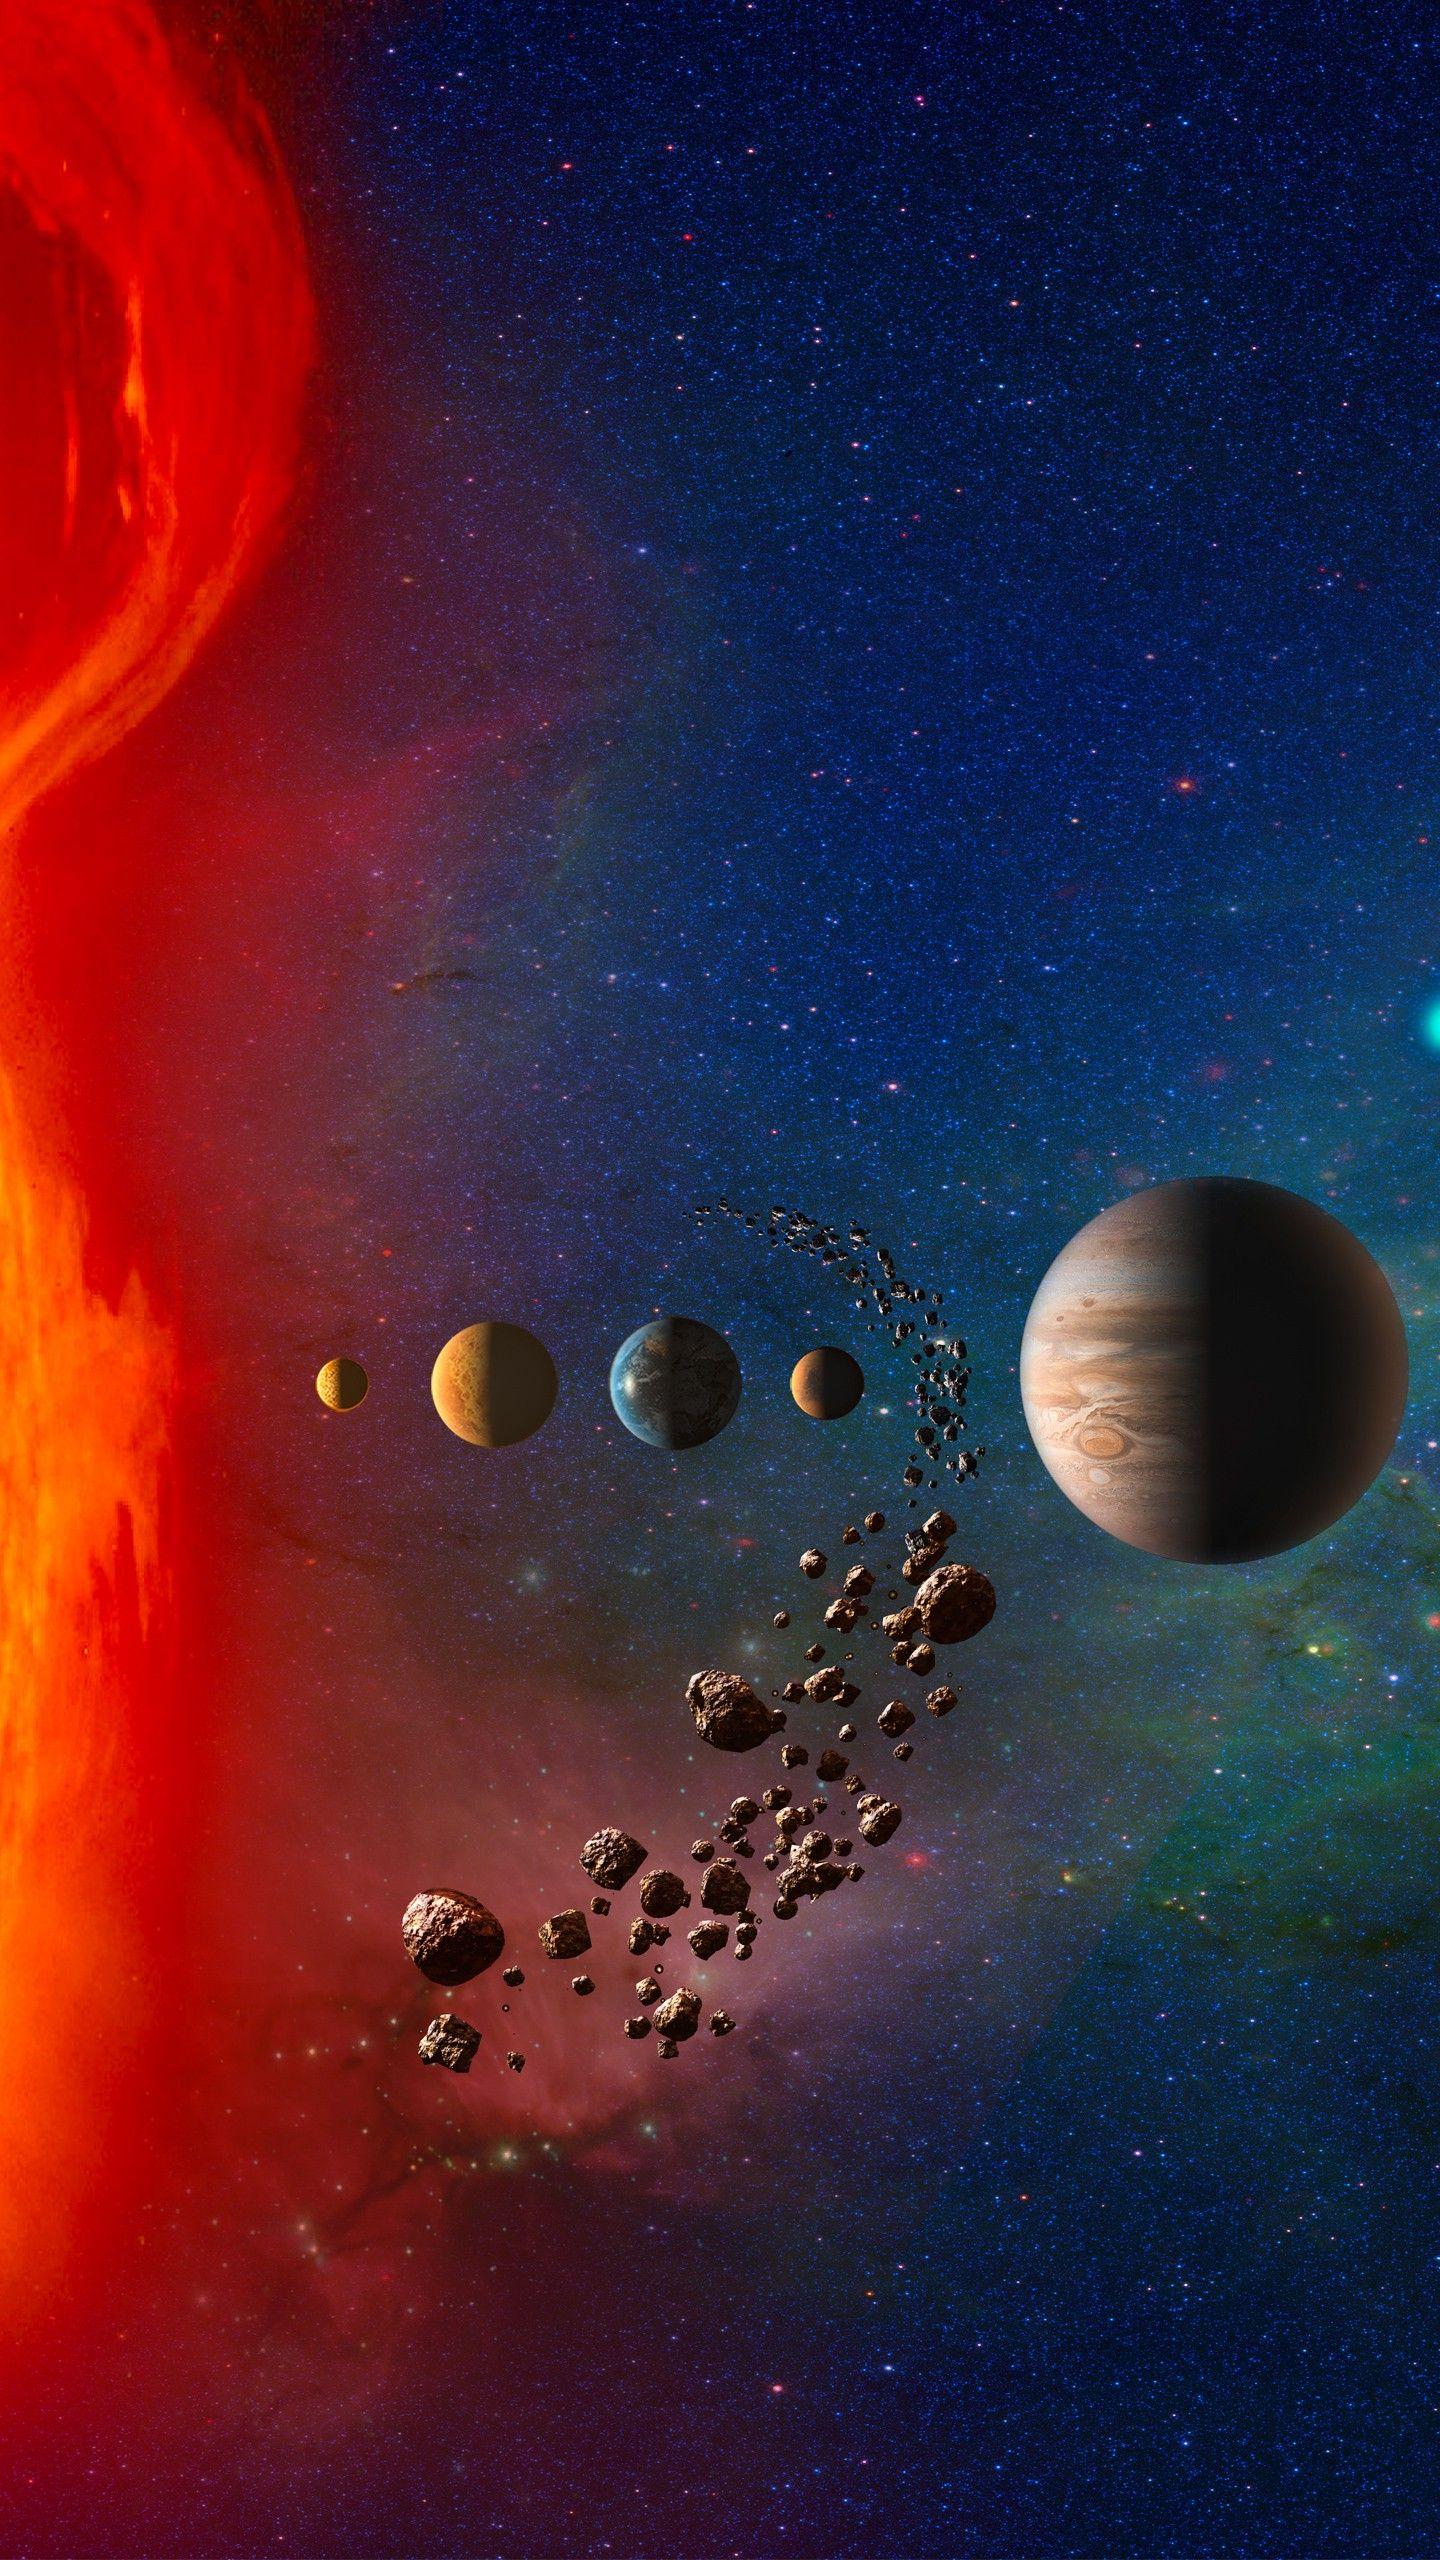 Solar System 4K Wallpapers - Top Free Solar System 4K ...